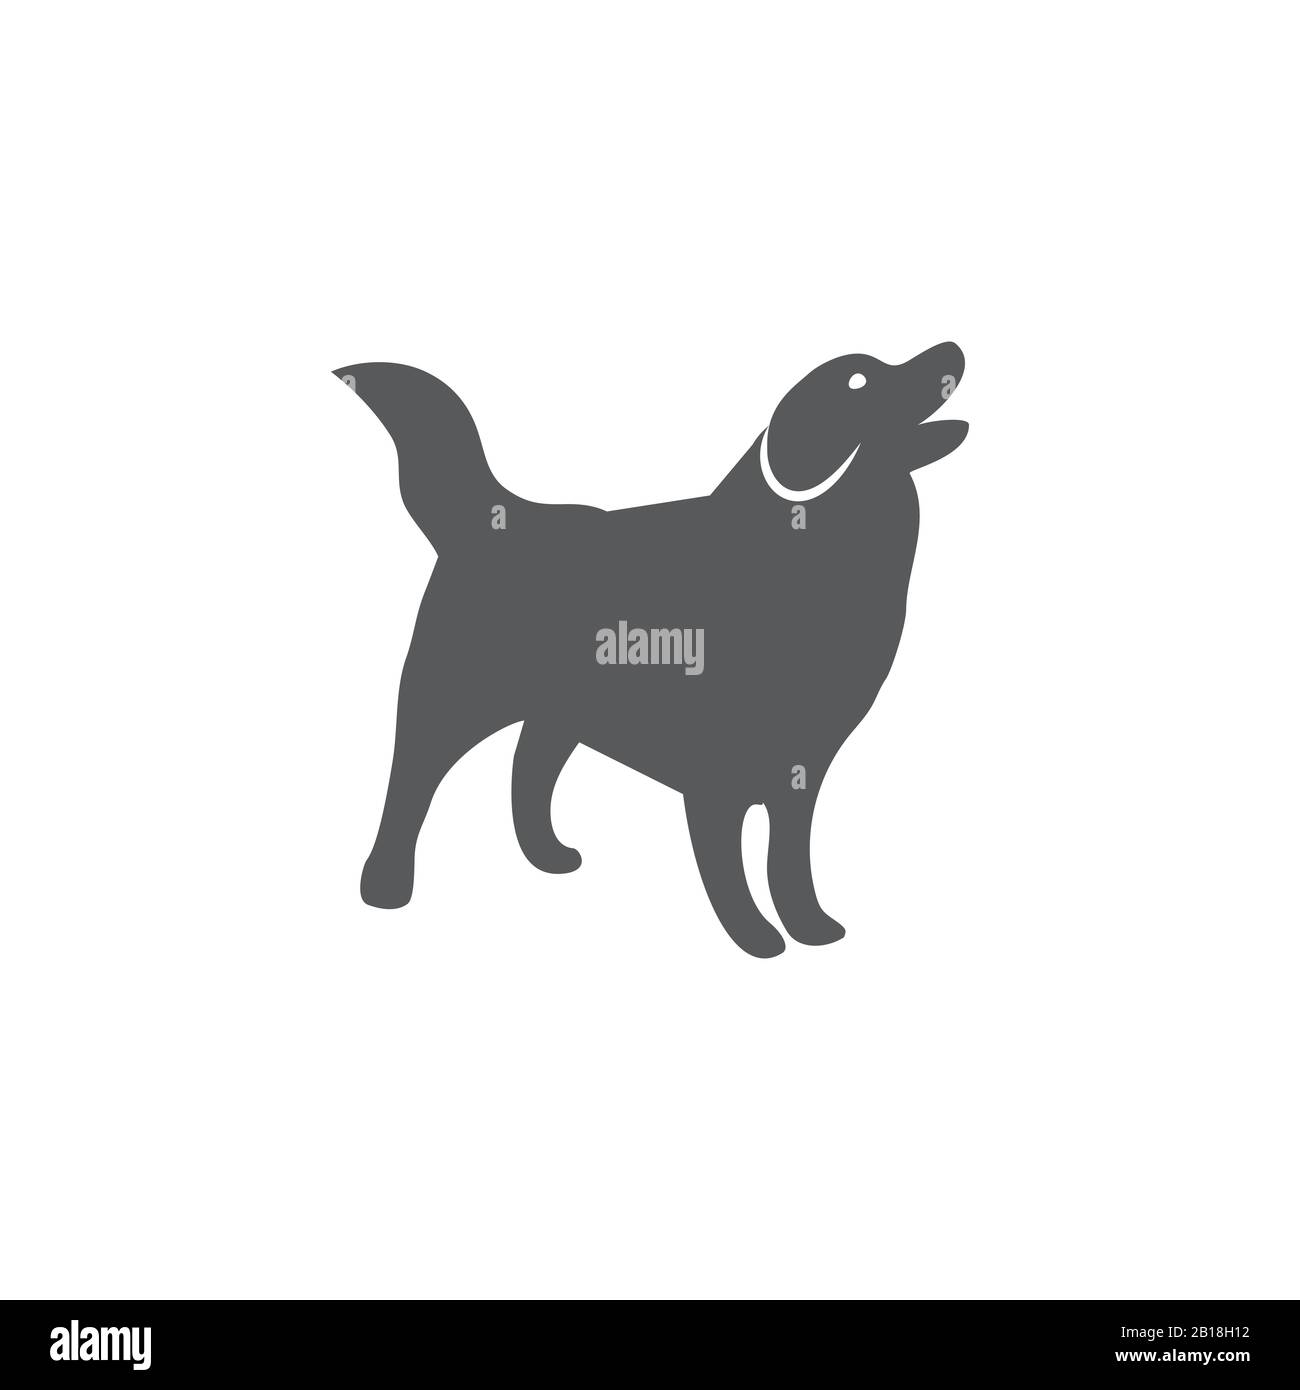 Dog icon on white background Stock Vector